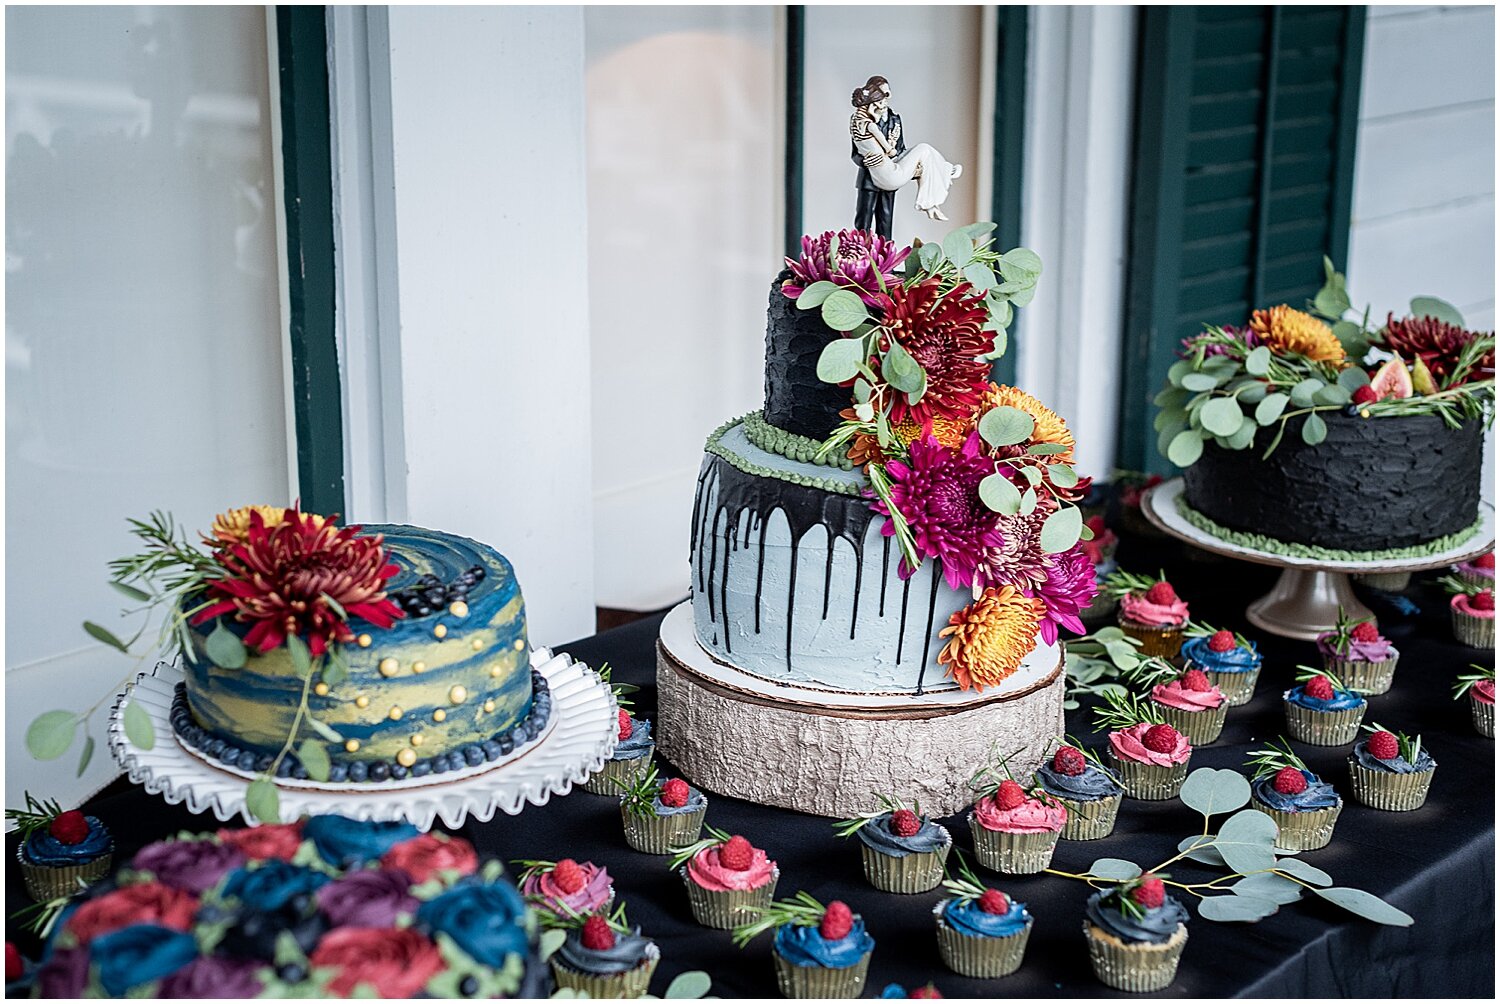  colorful wedding cake and dessert table display 